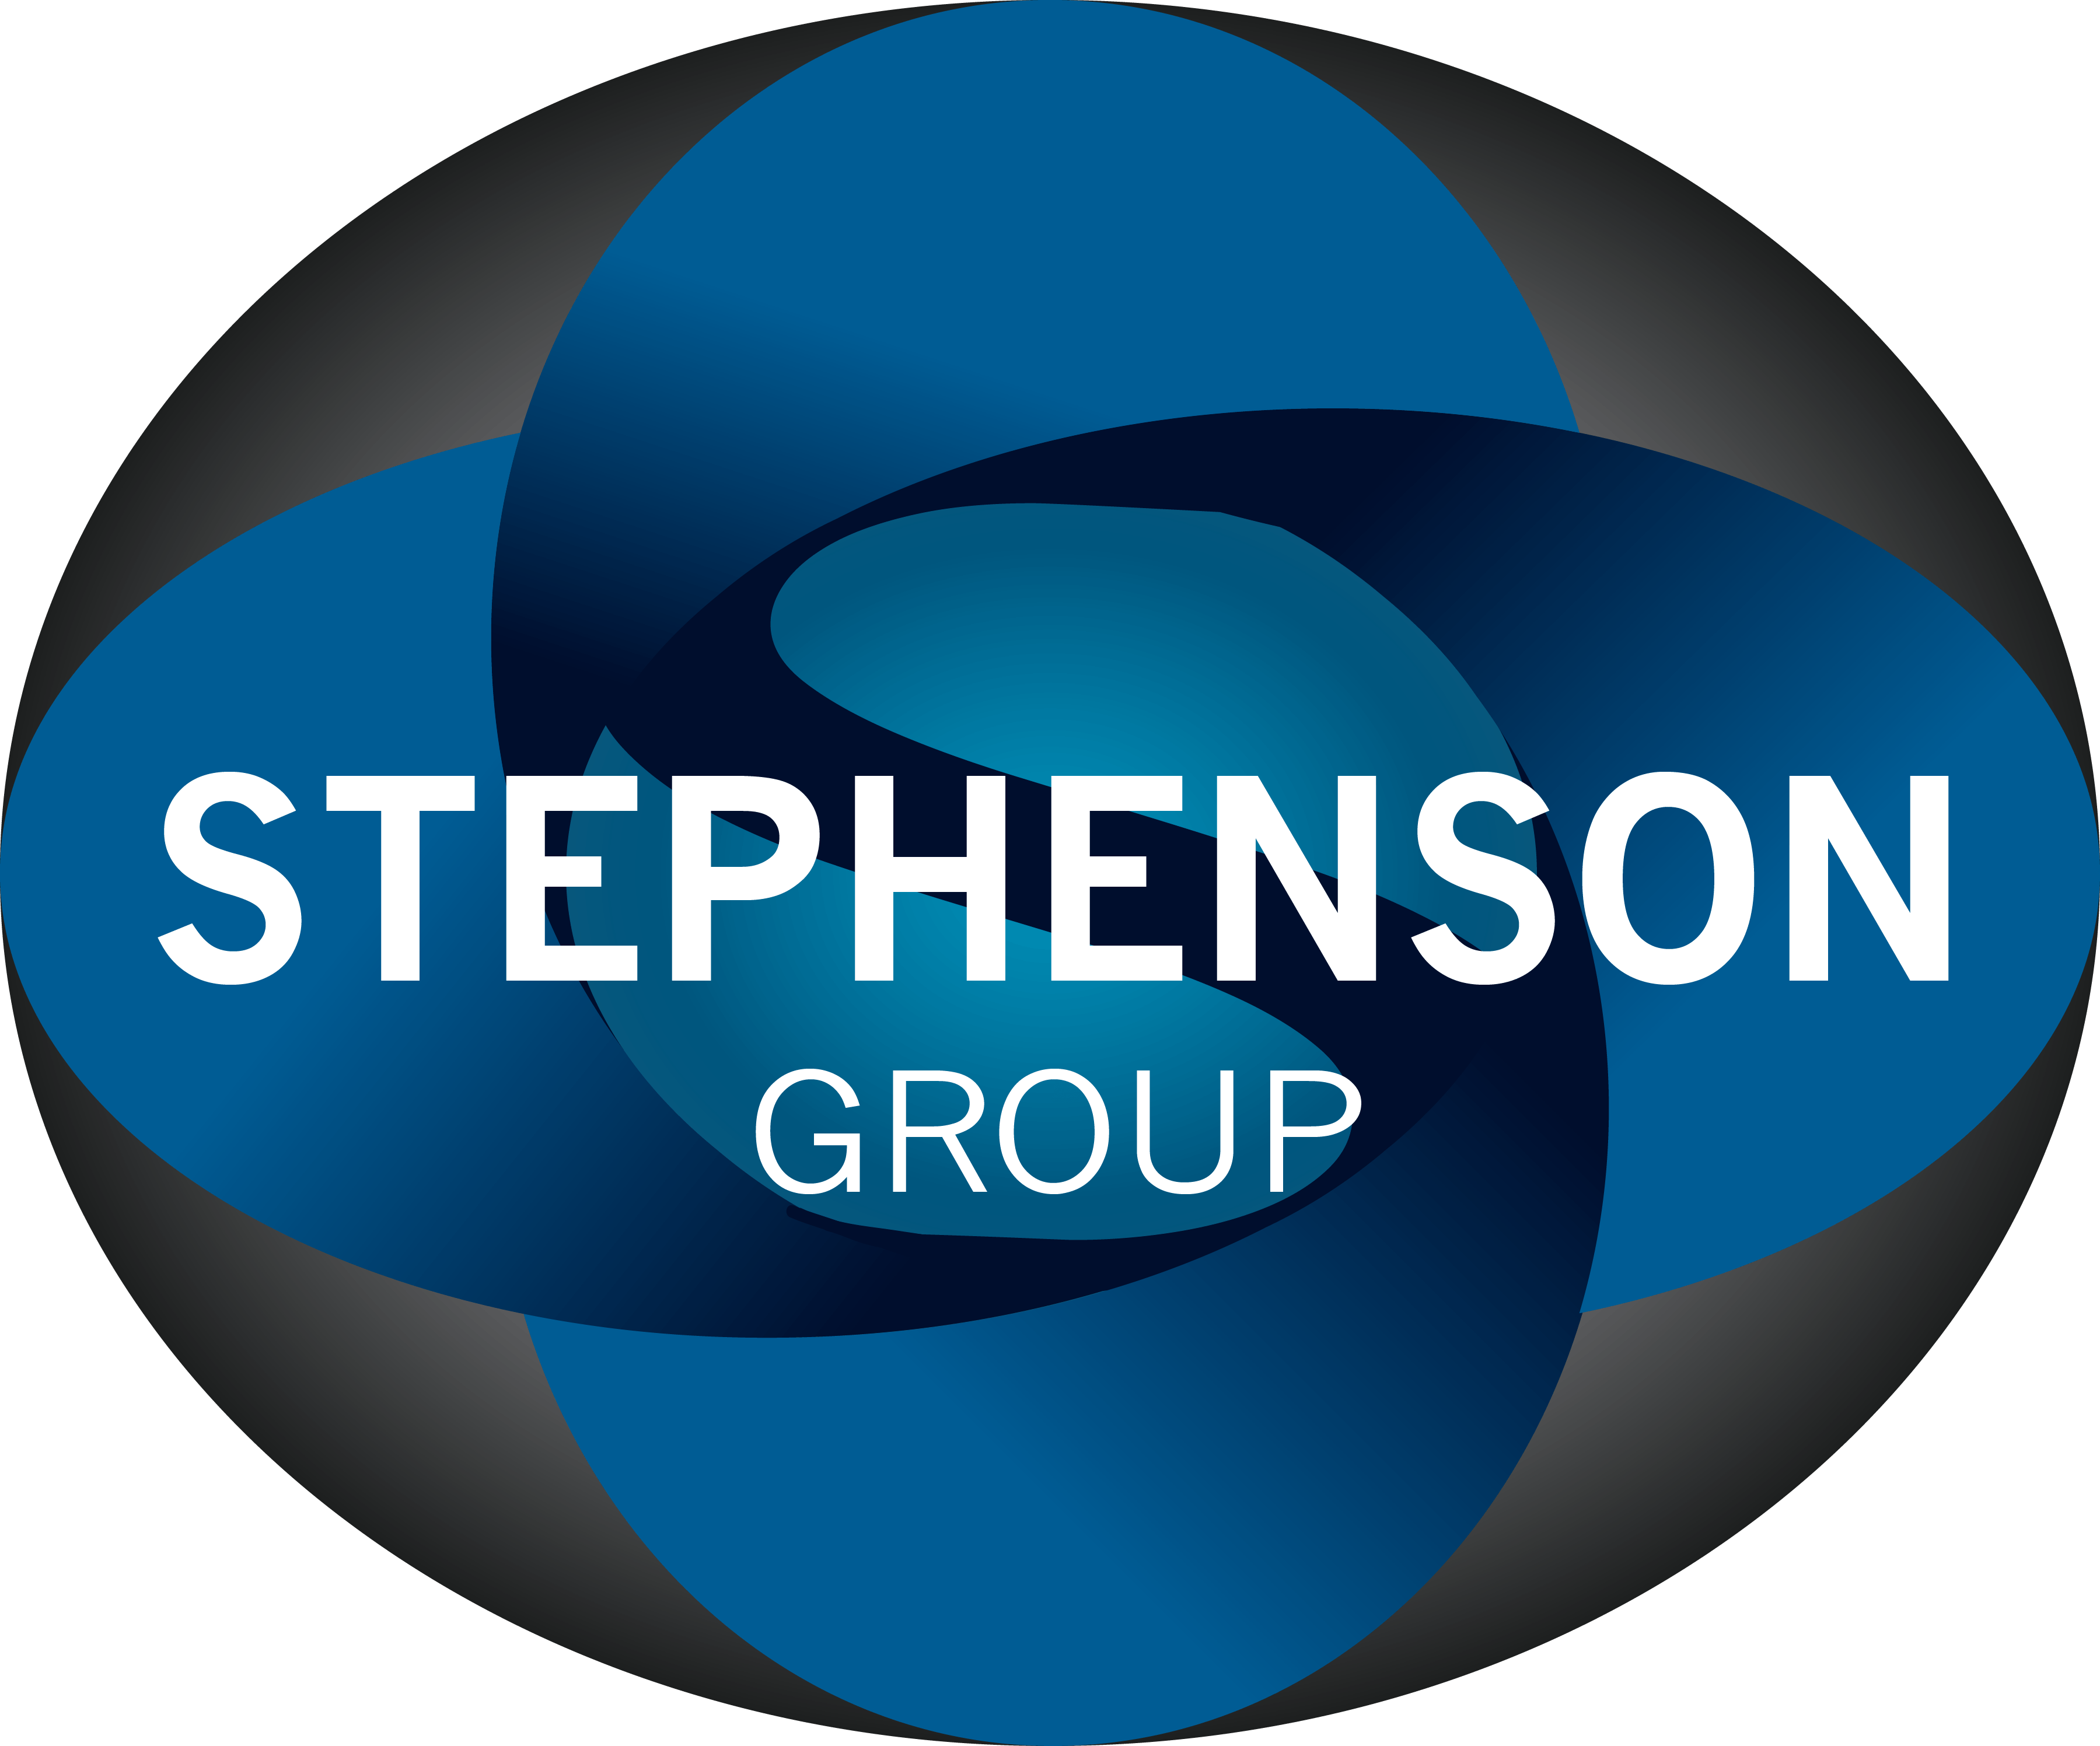 Stephenson Logo - Stephenson Group